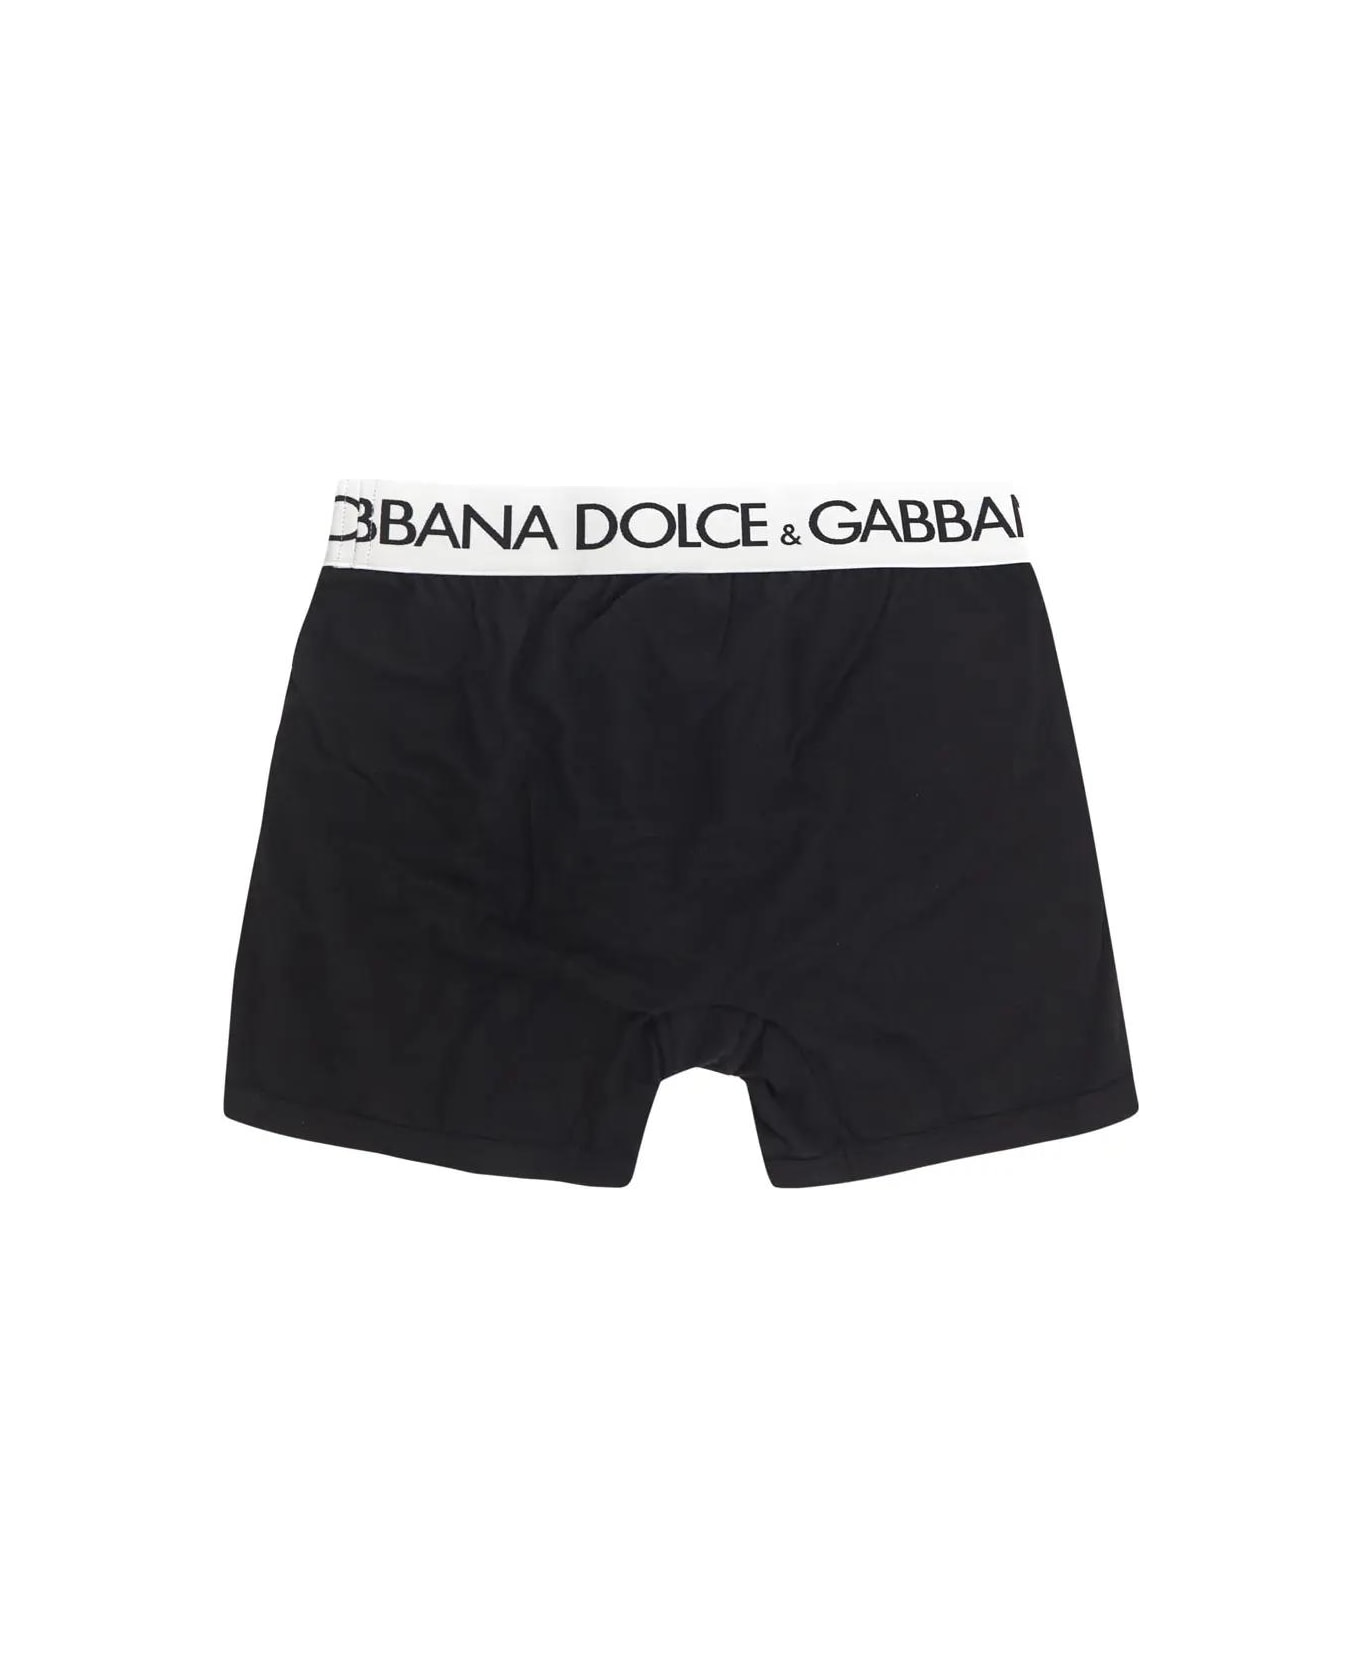 Dolce & Gabbana Boxers With Logo - Black